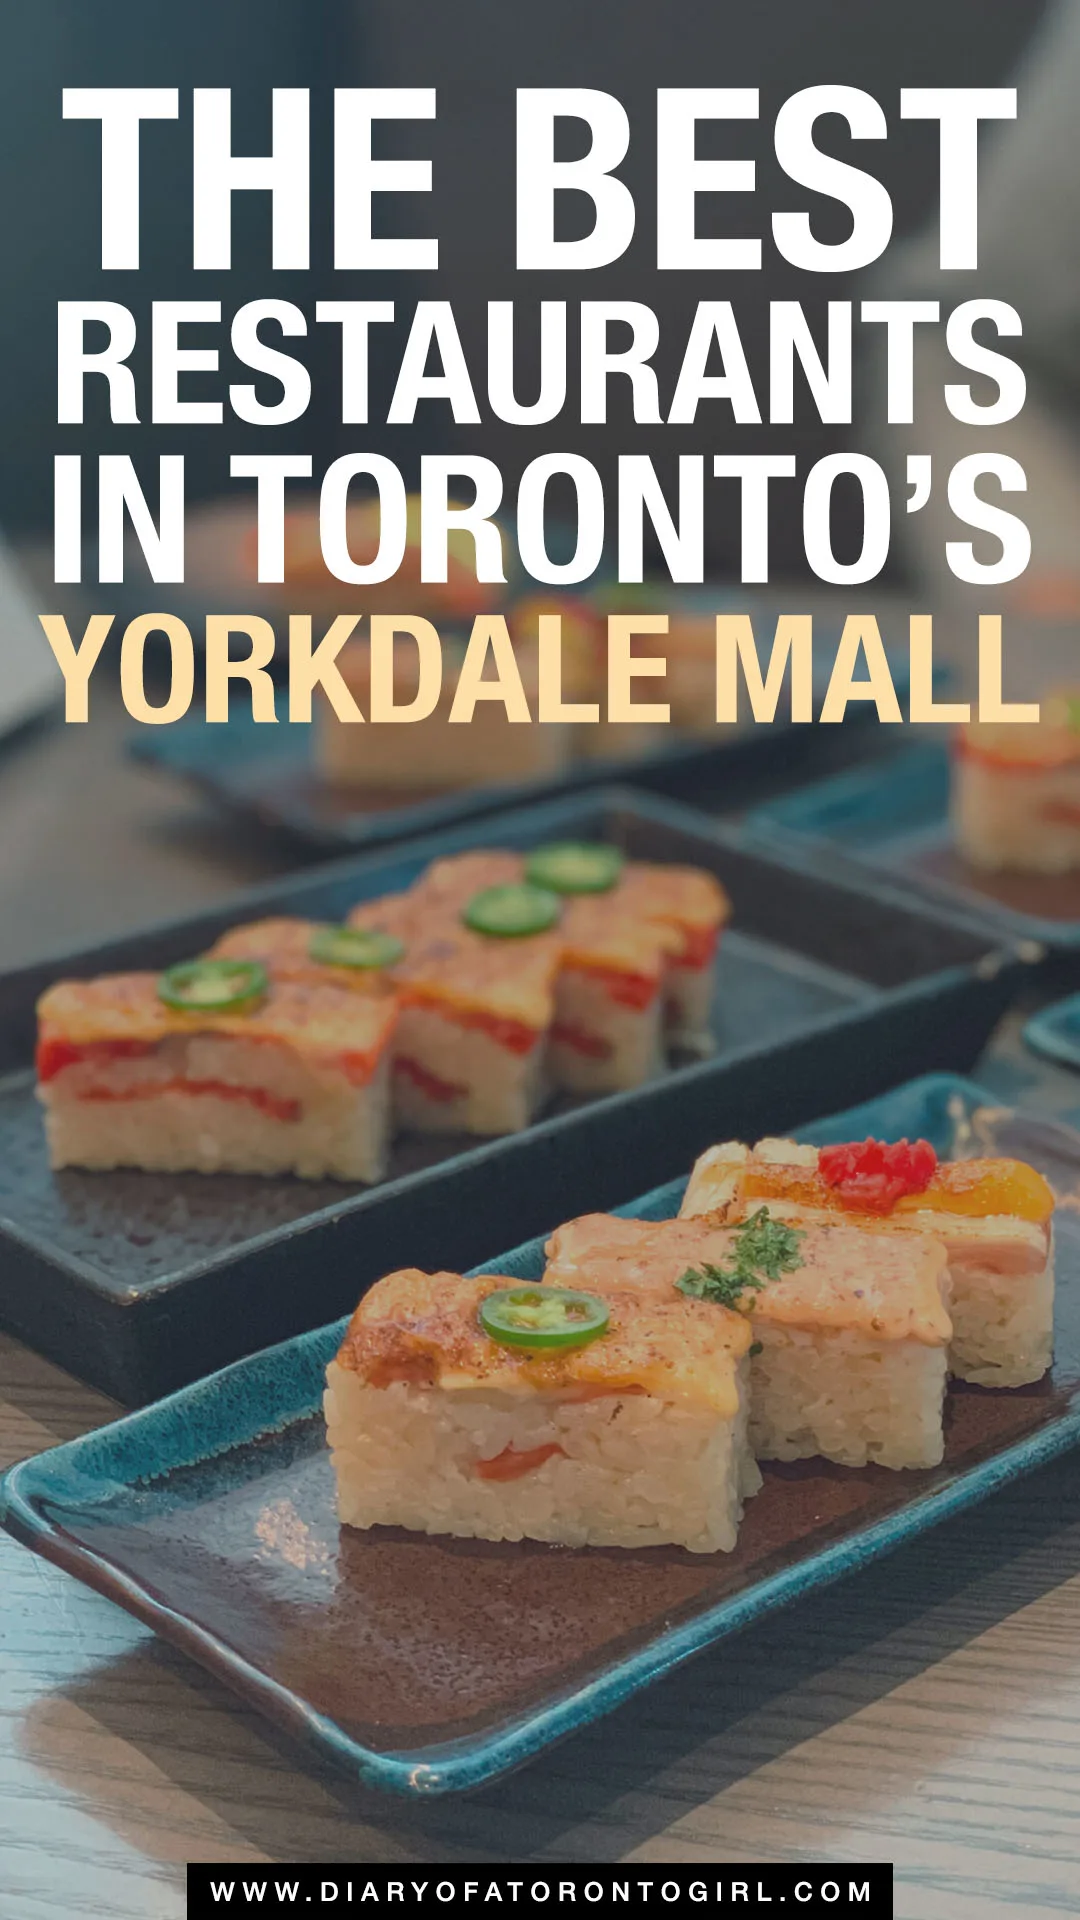 Best restaurants in Toronto's Yorkdale Mall